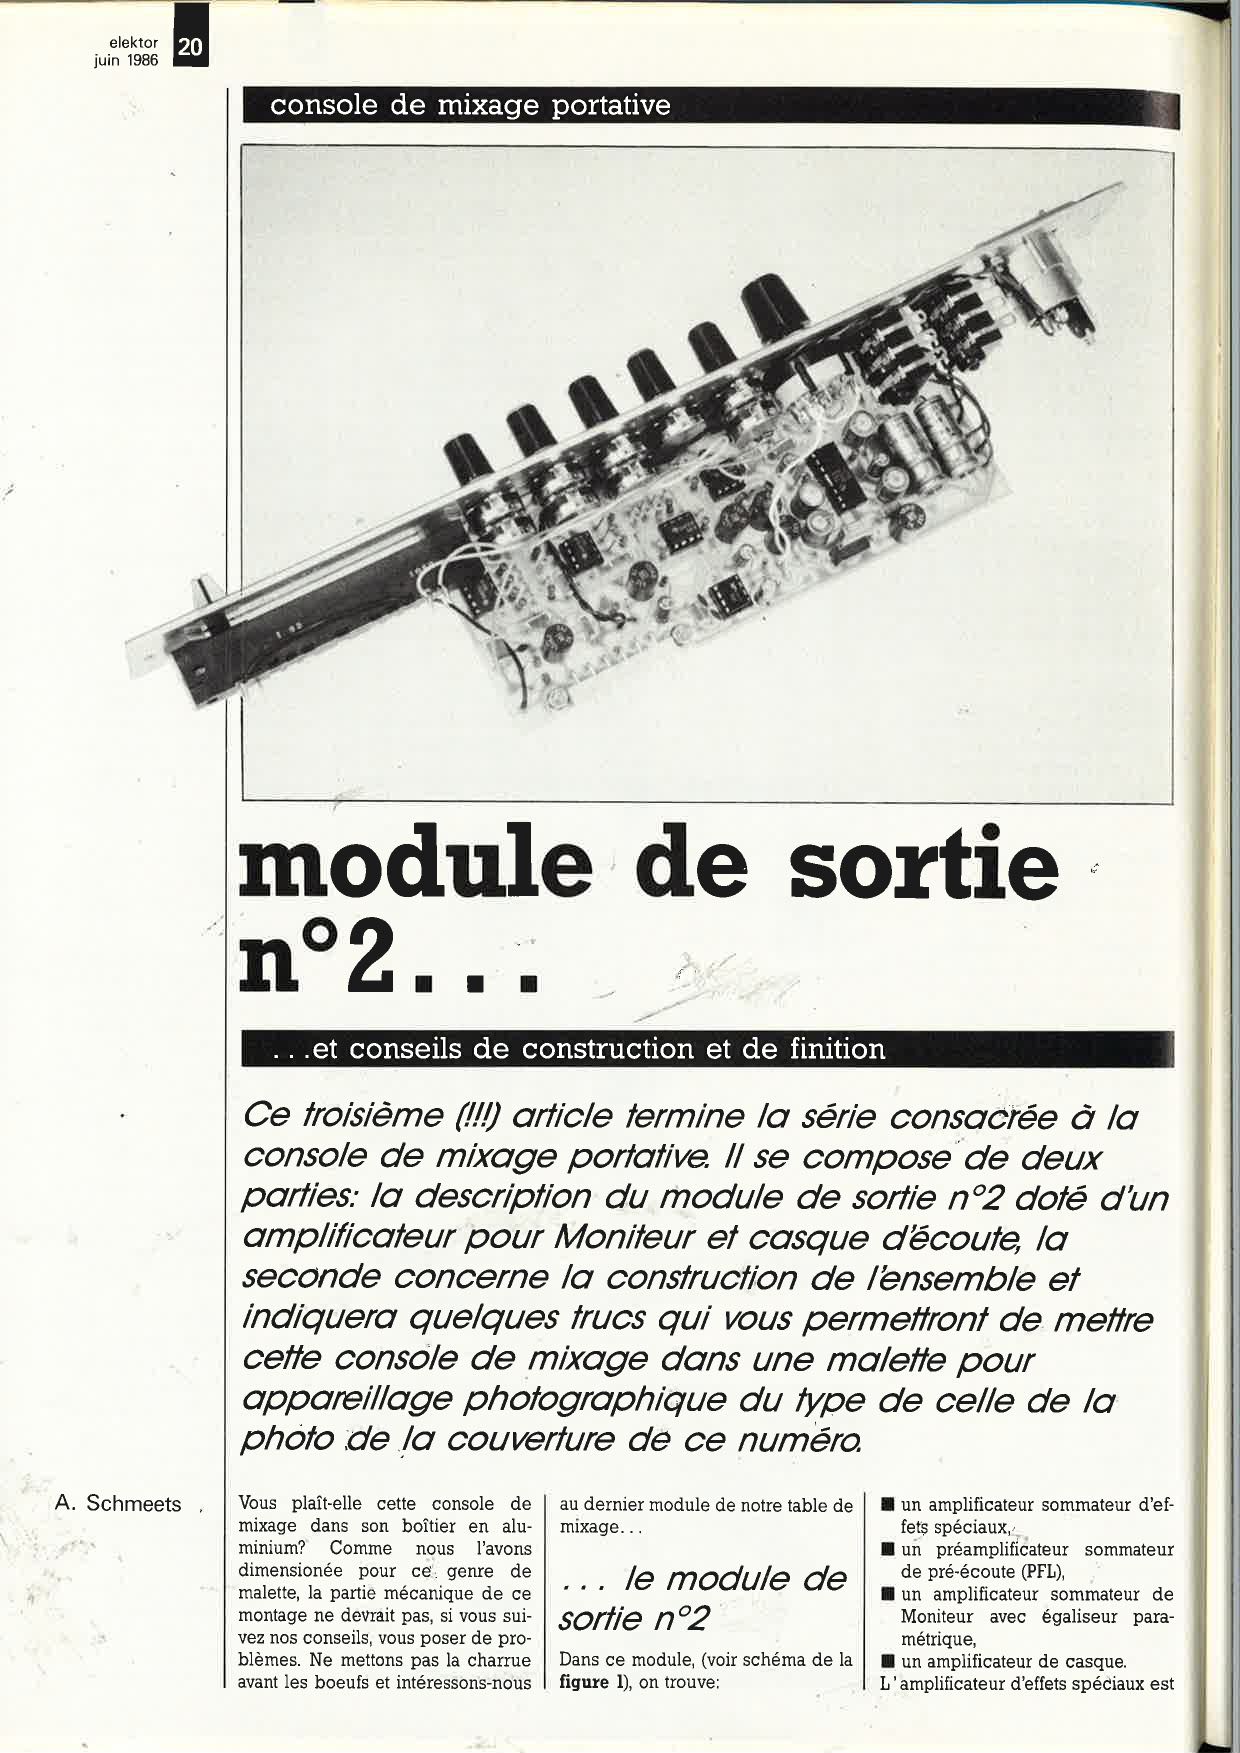 Console de mixage portative: module de sortie n°2